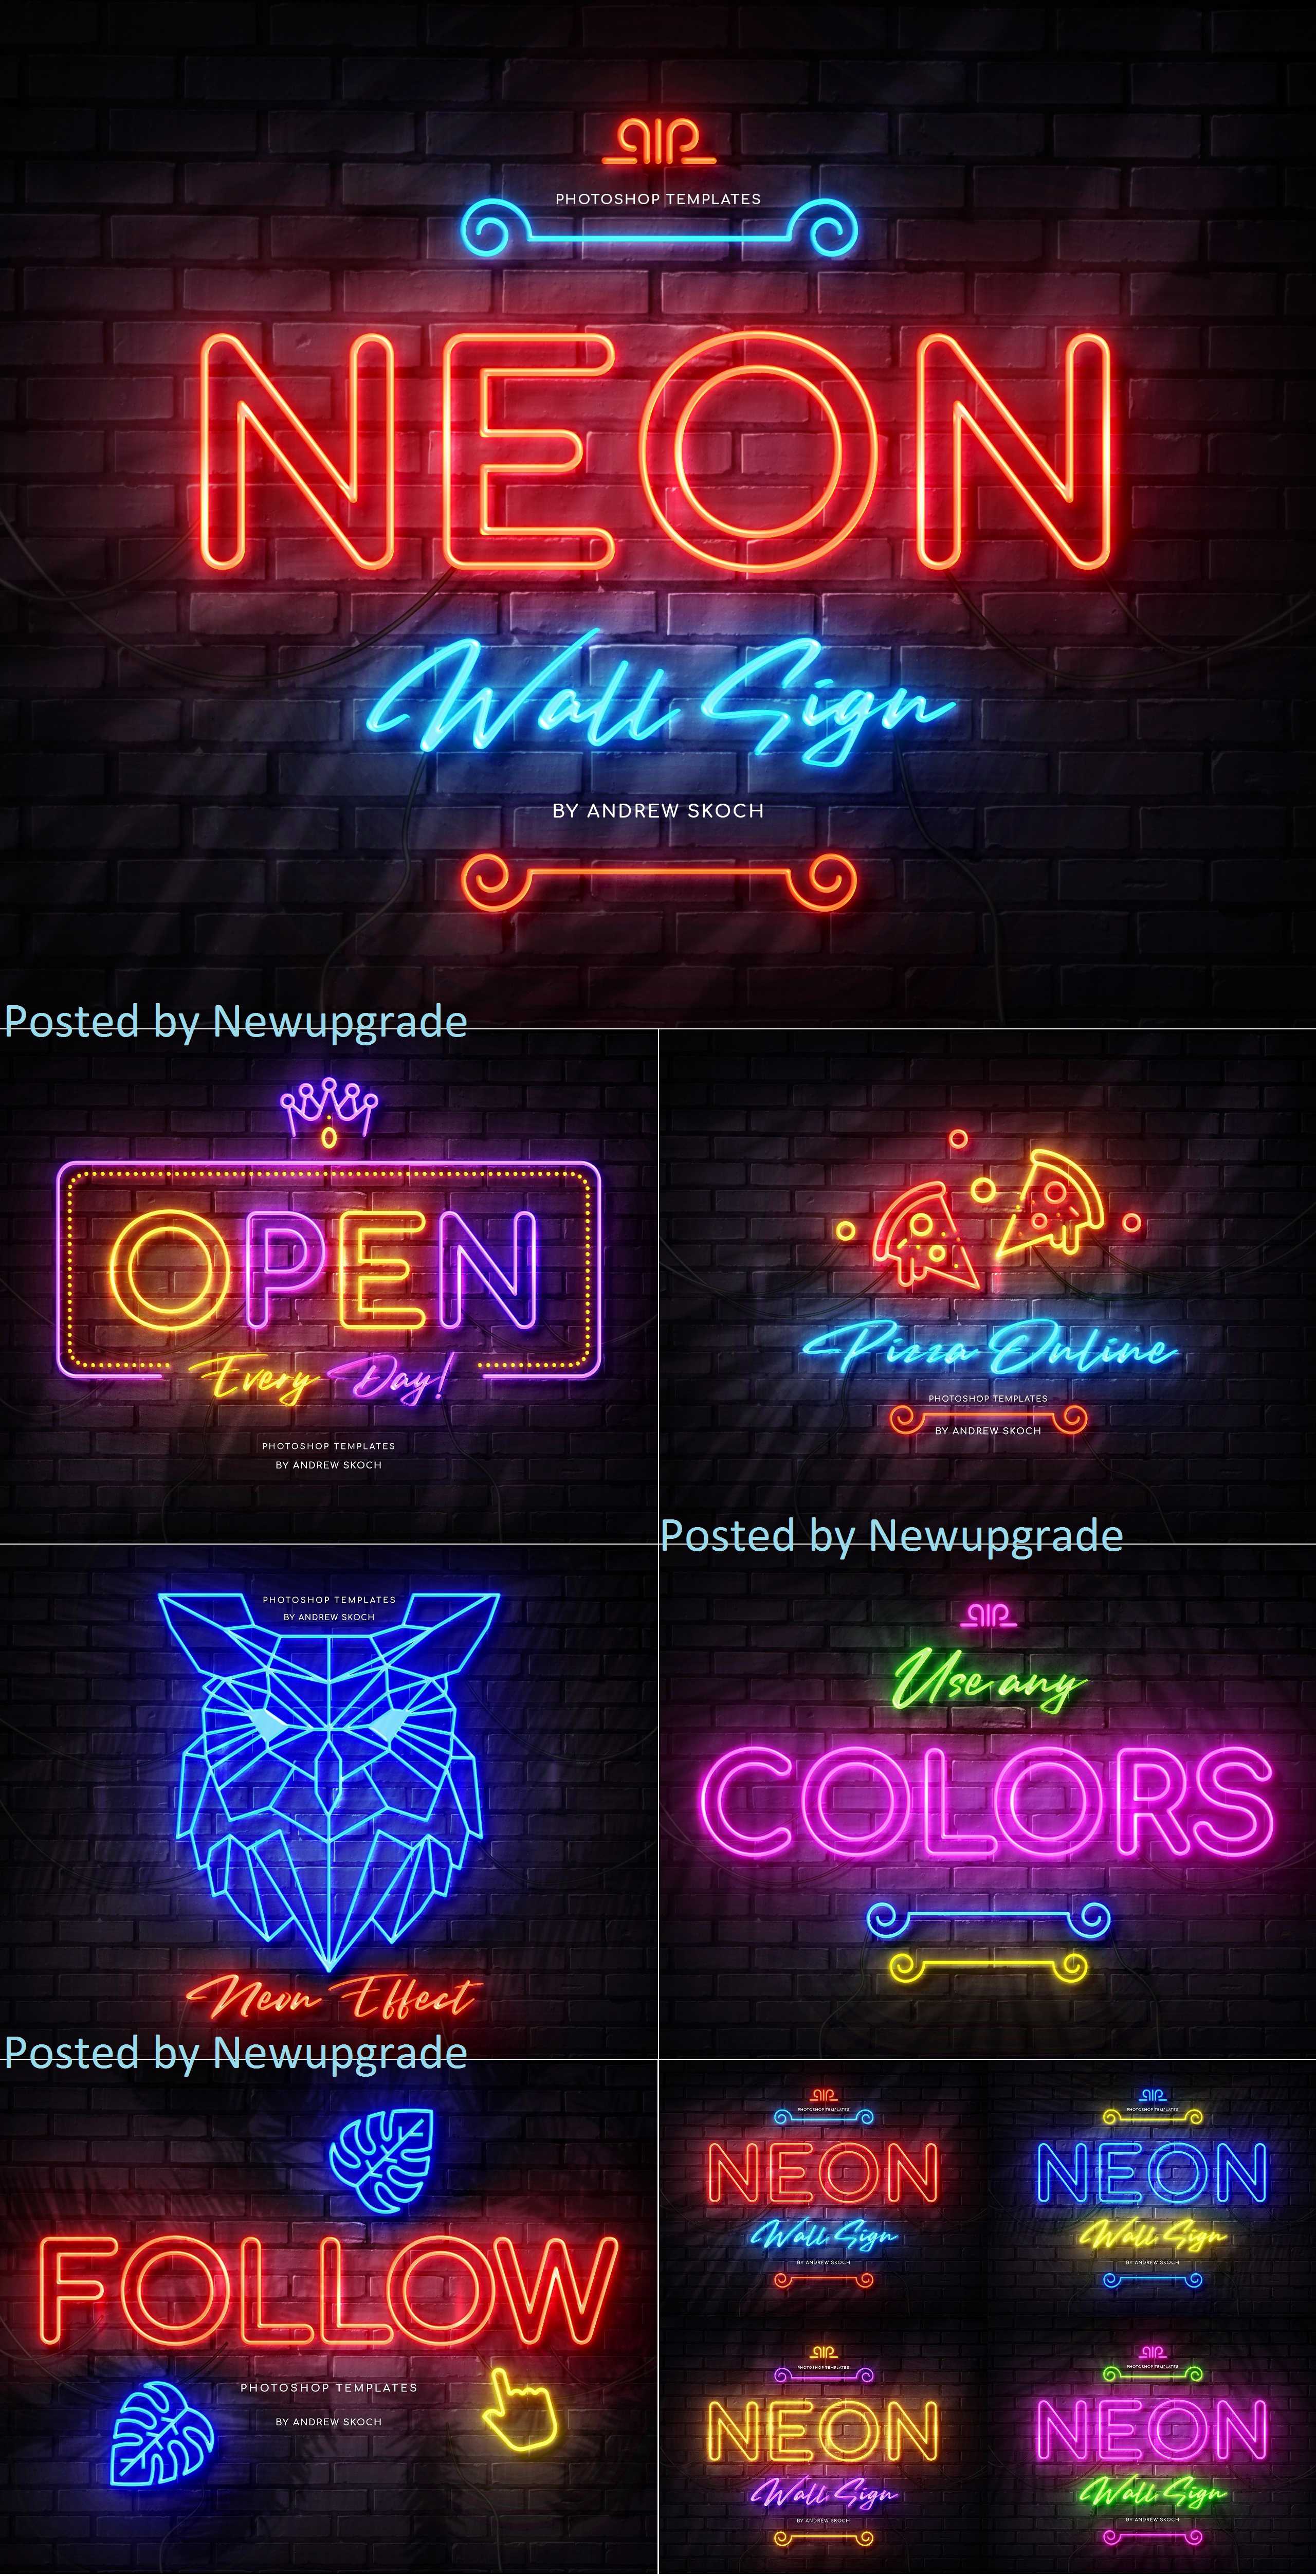 Graphicriver - Neon Wall Sign Creator 26127266 - SoftArchive